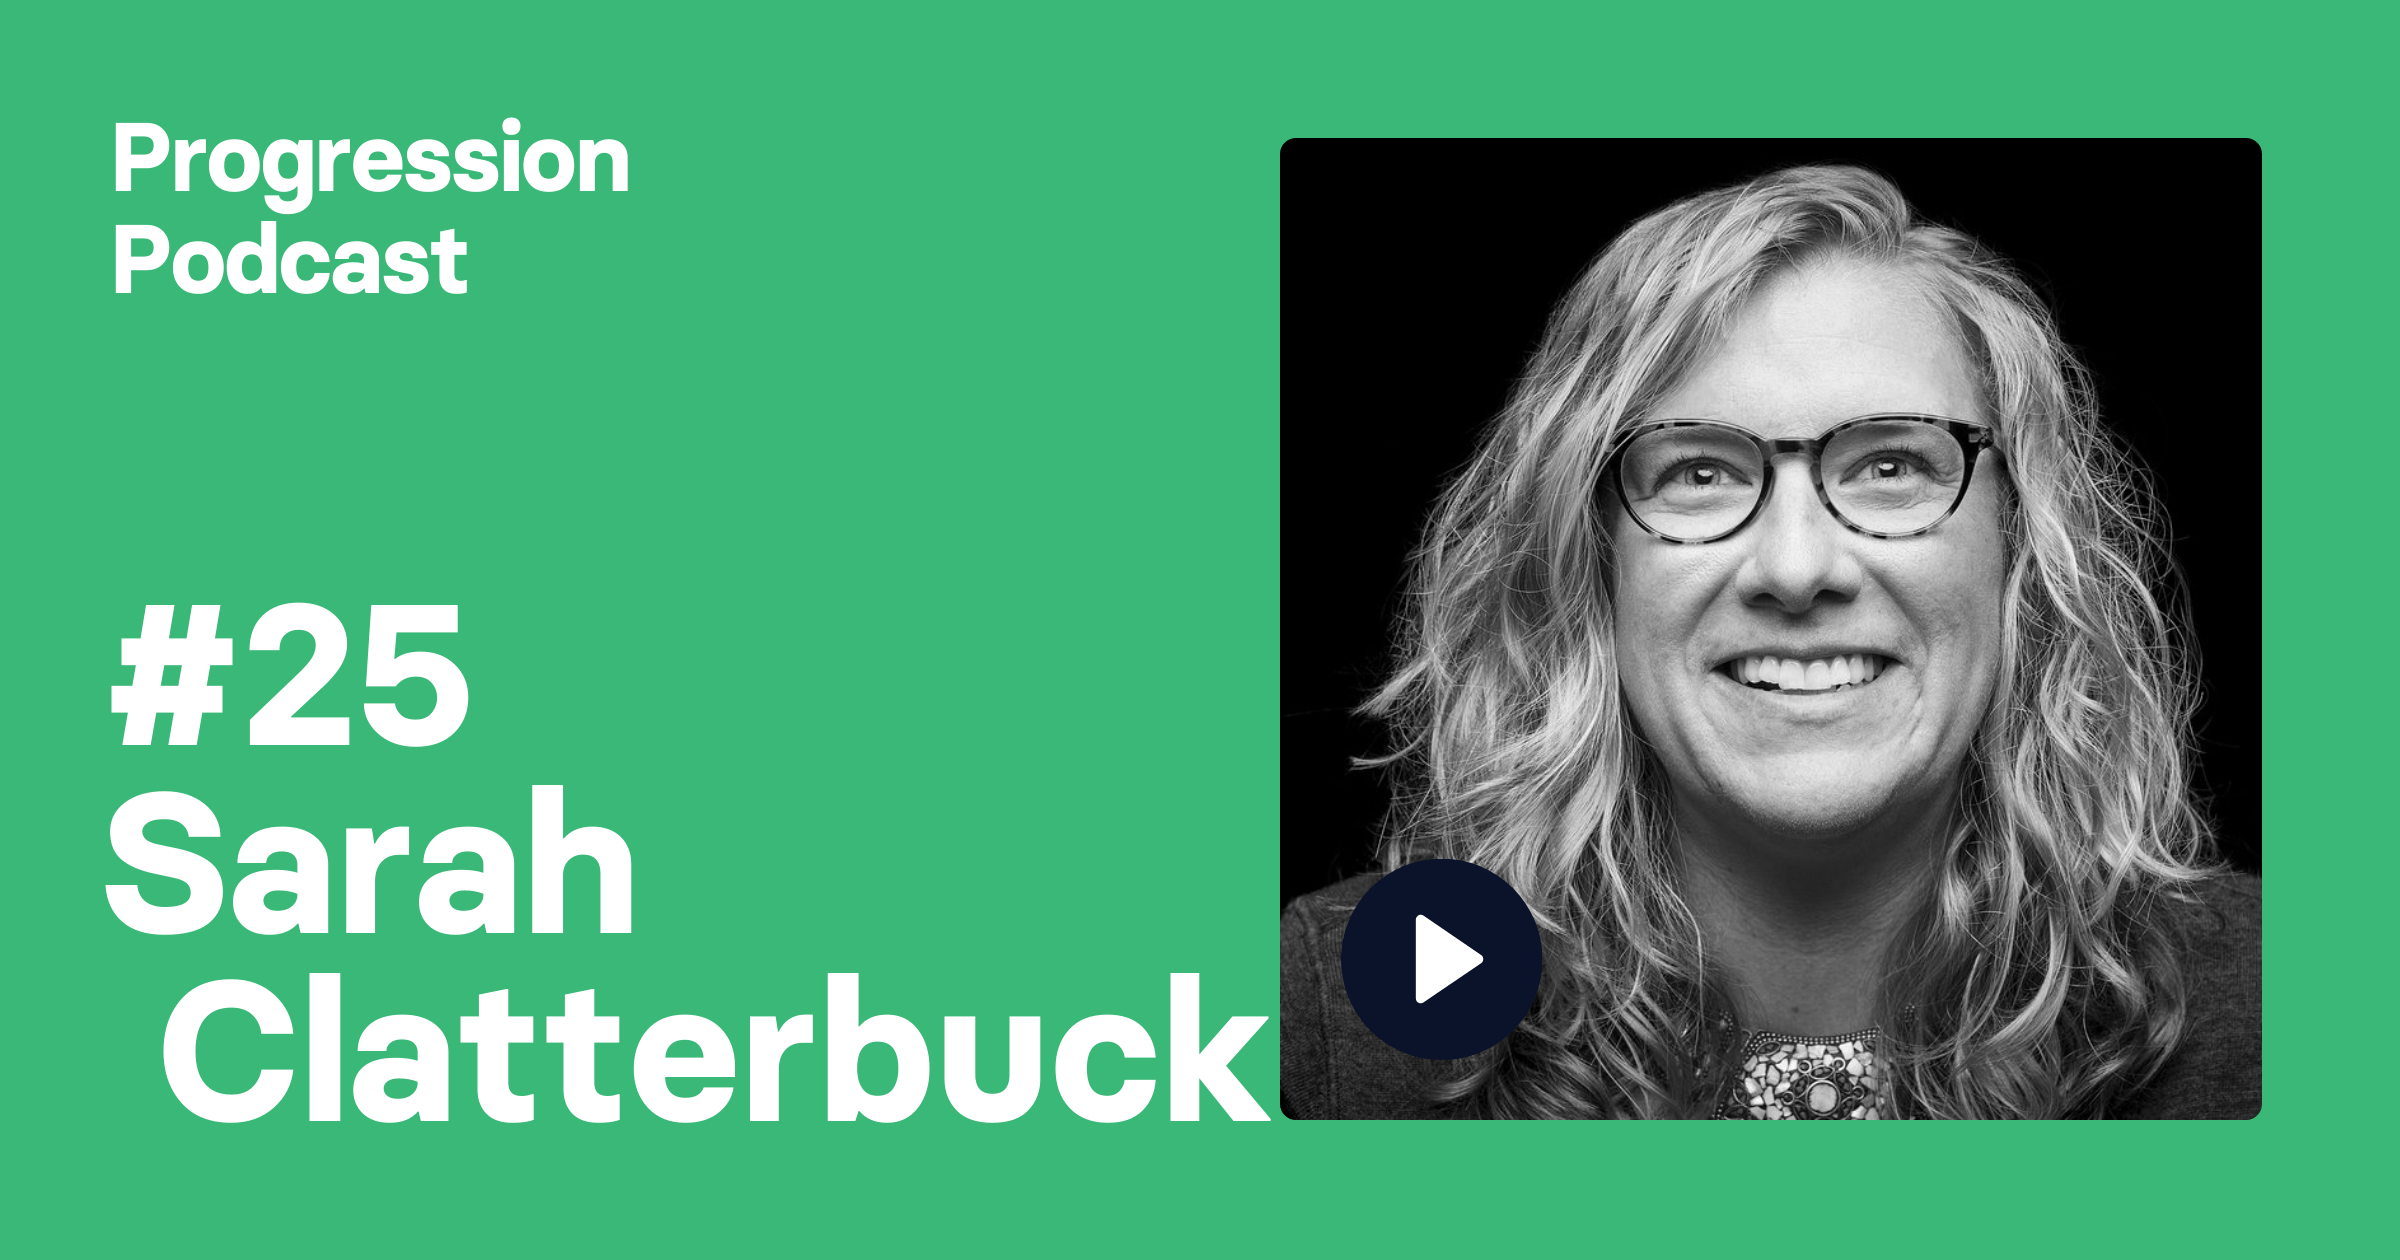 Podcast #25 Sarah Clatterbuck (Yahoo, LinkedIn, Google) on frameworks for startups vs large orgs and avoiding anti-patterns